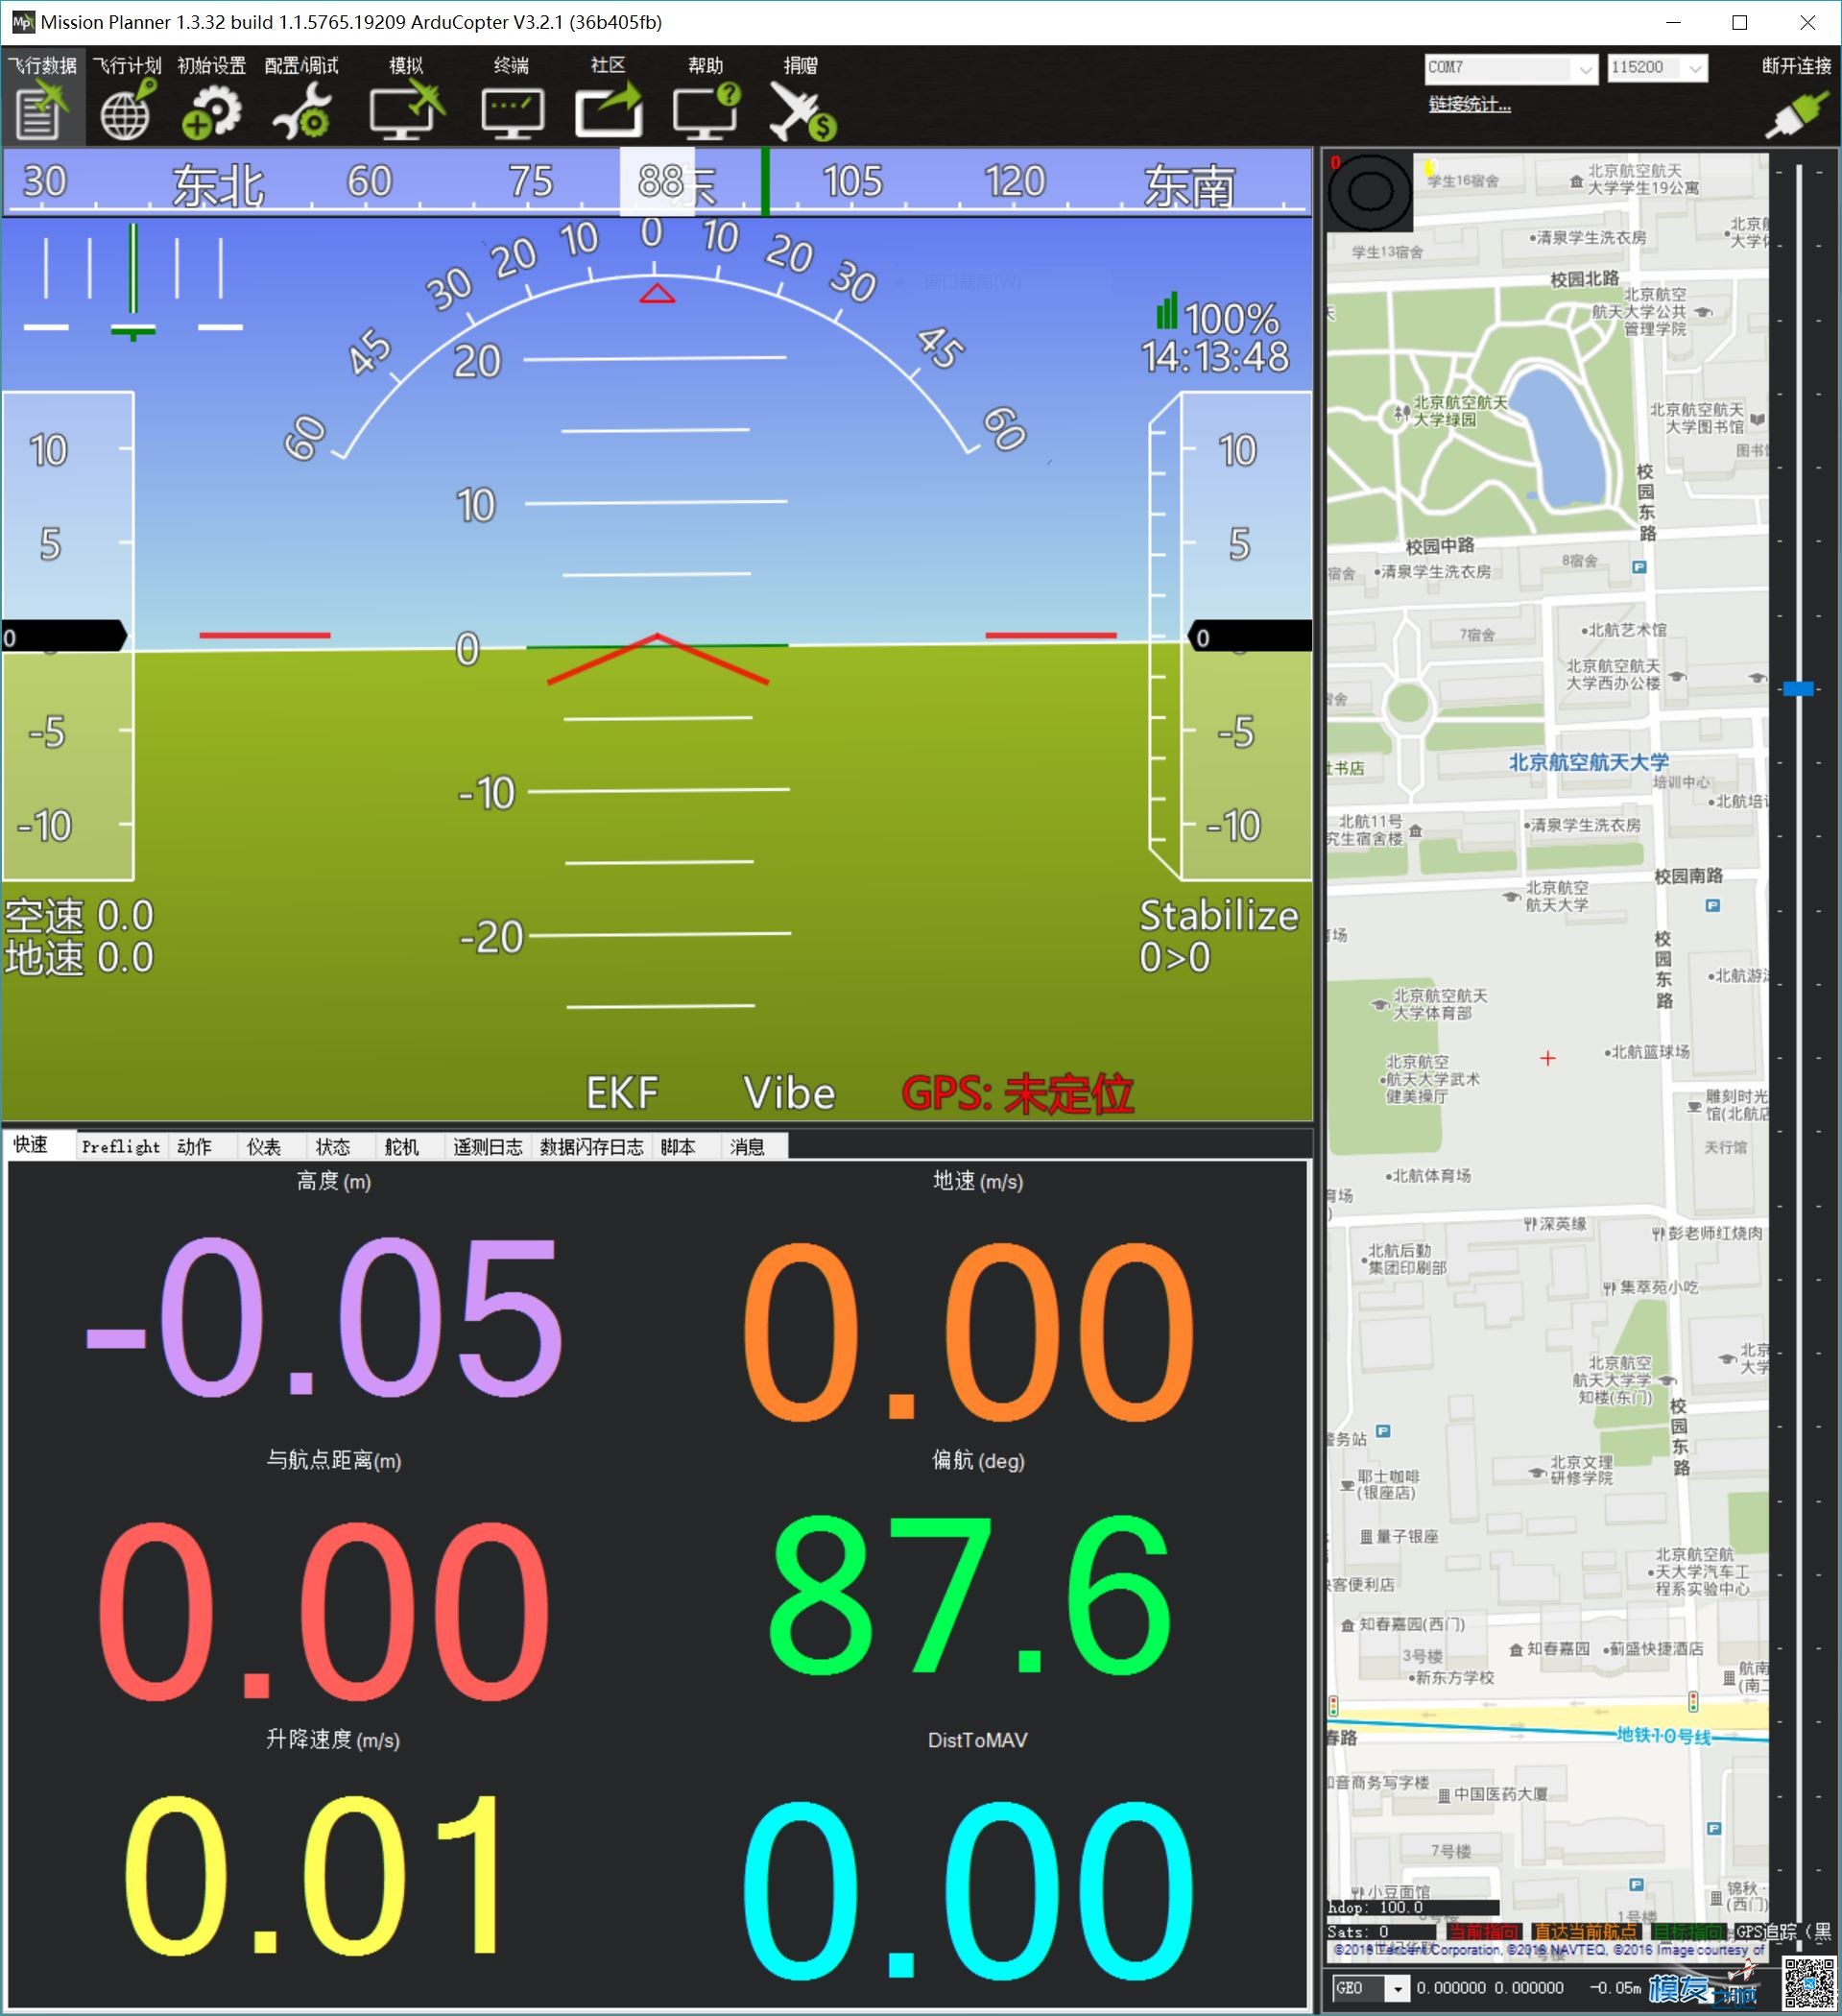 miniAPM 固定翼固件 Bad GPS Healthy 固定翼,固件,APM,GPS,叮咚mini2刷固件 作者:豆远航 8991 